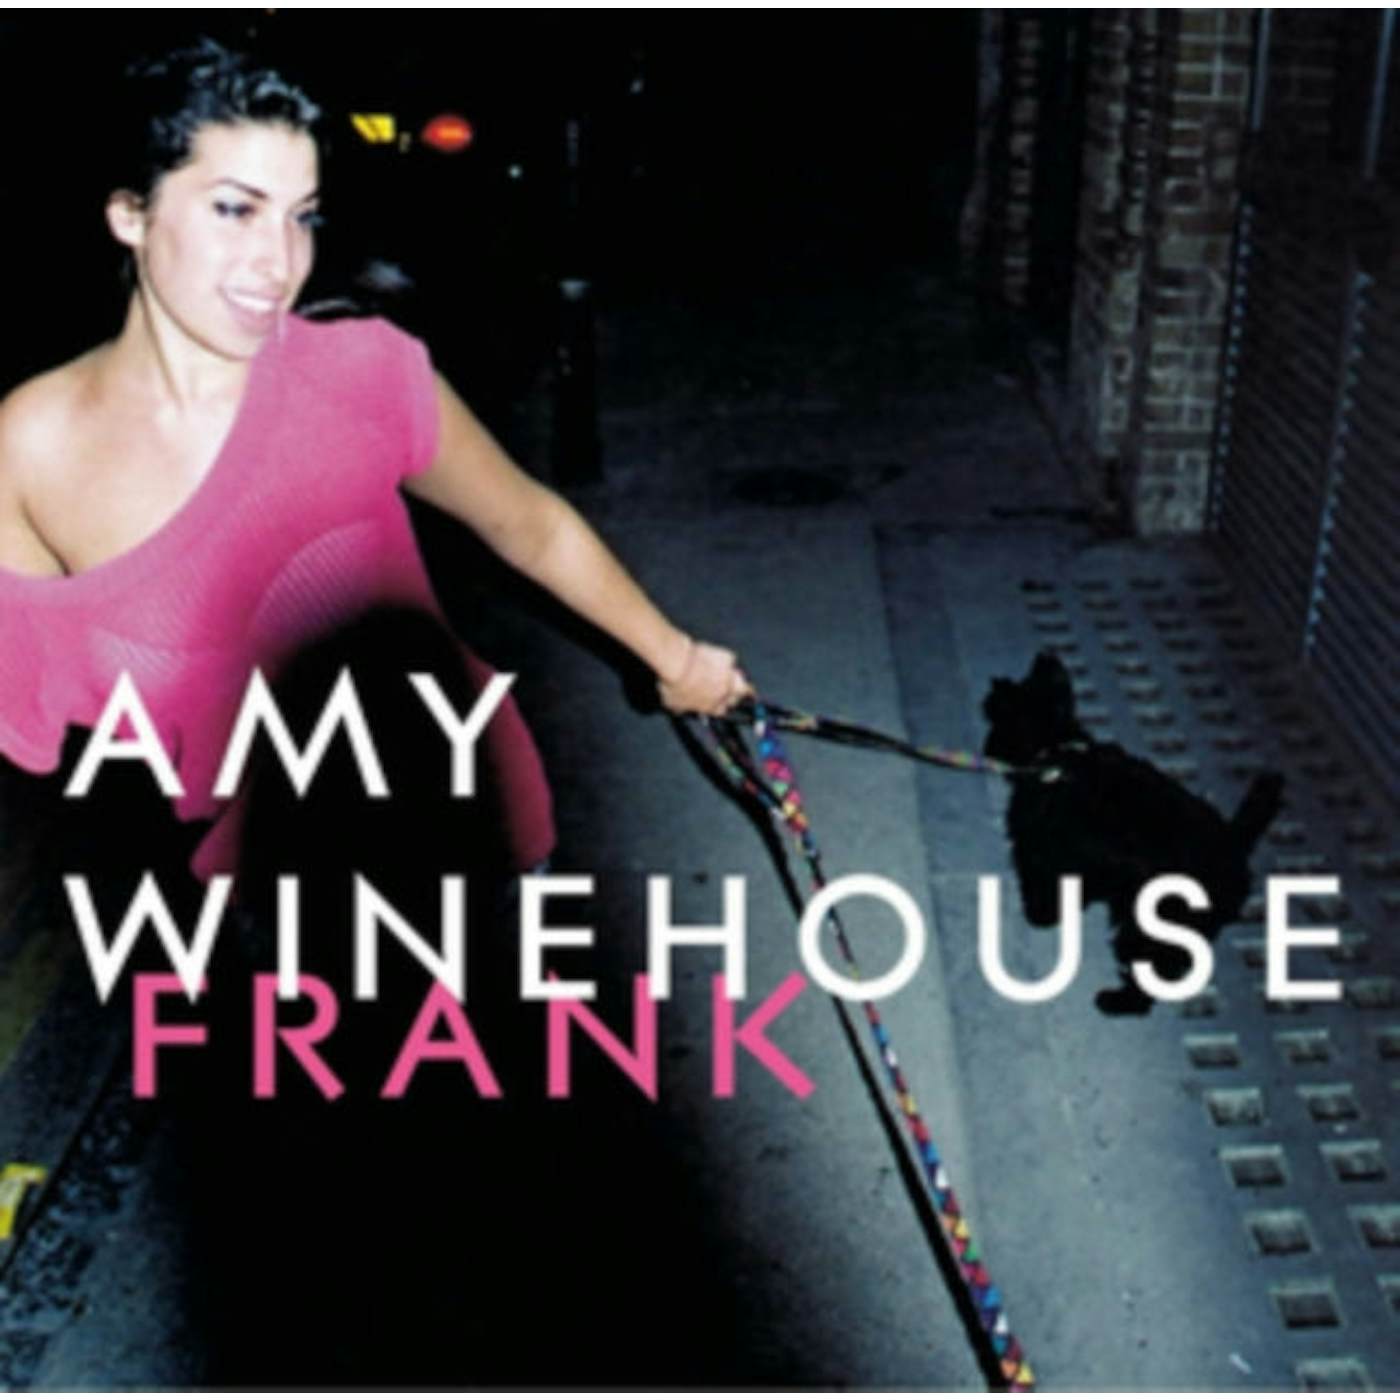 Amy Winehouse LP Vinyl Record - Frank